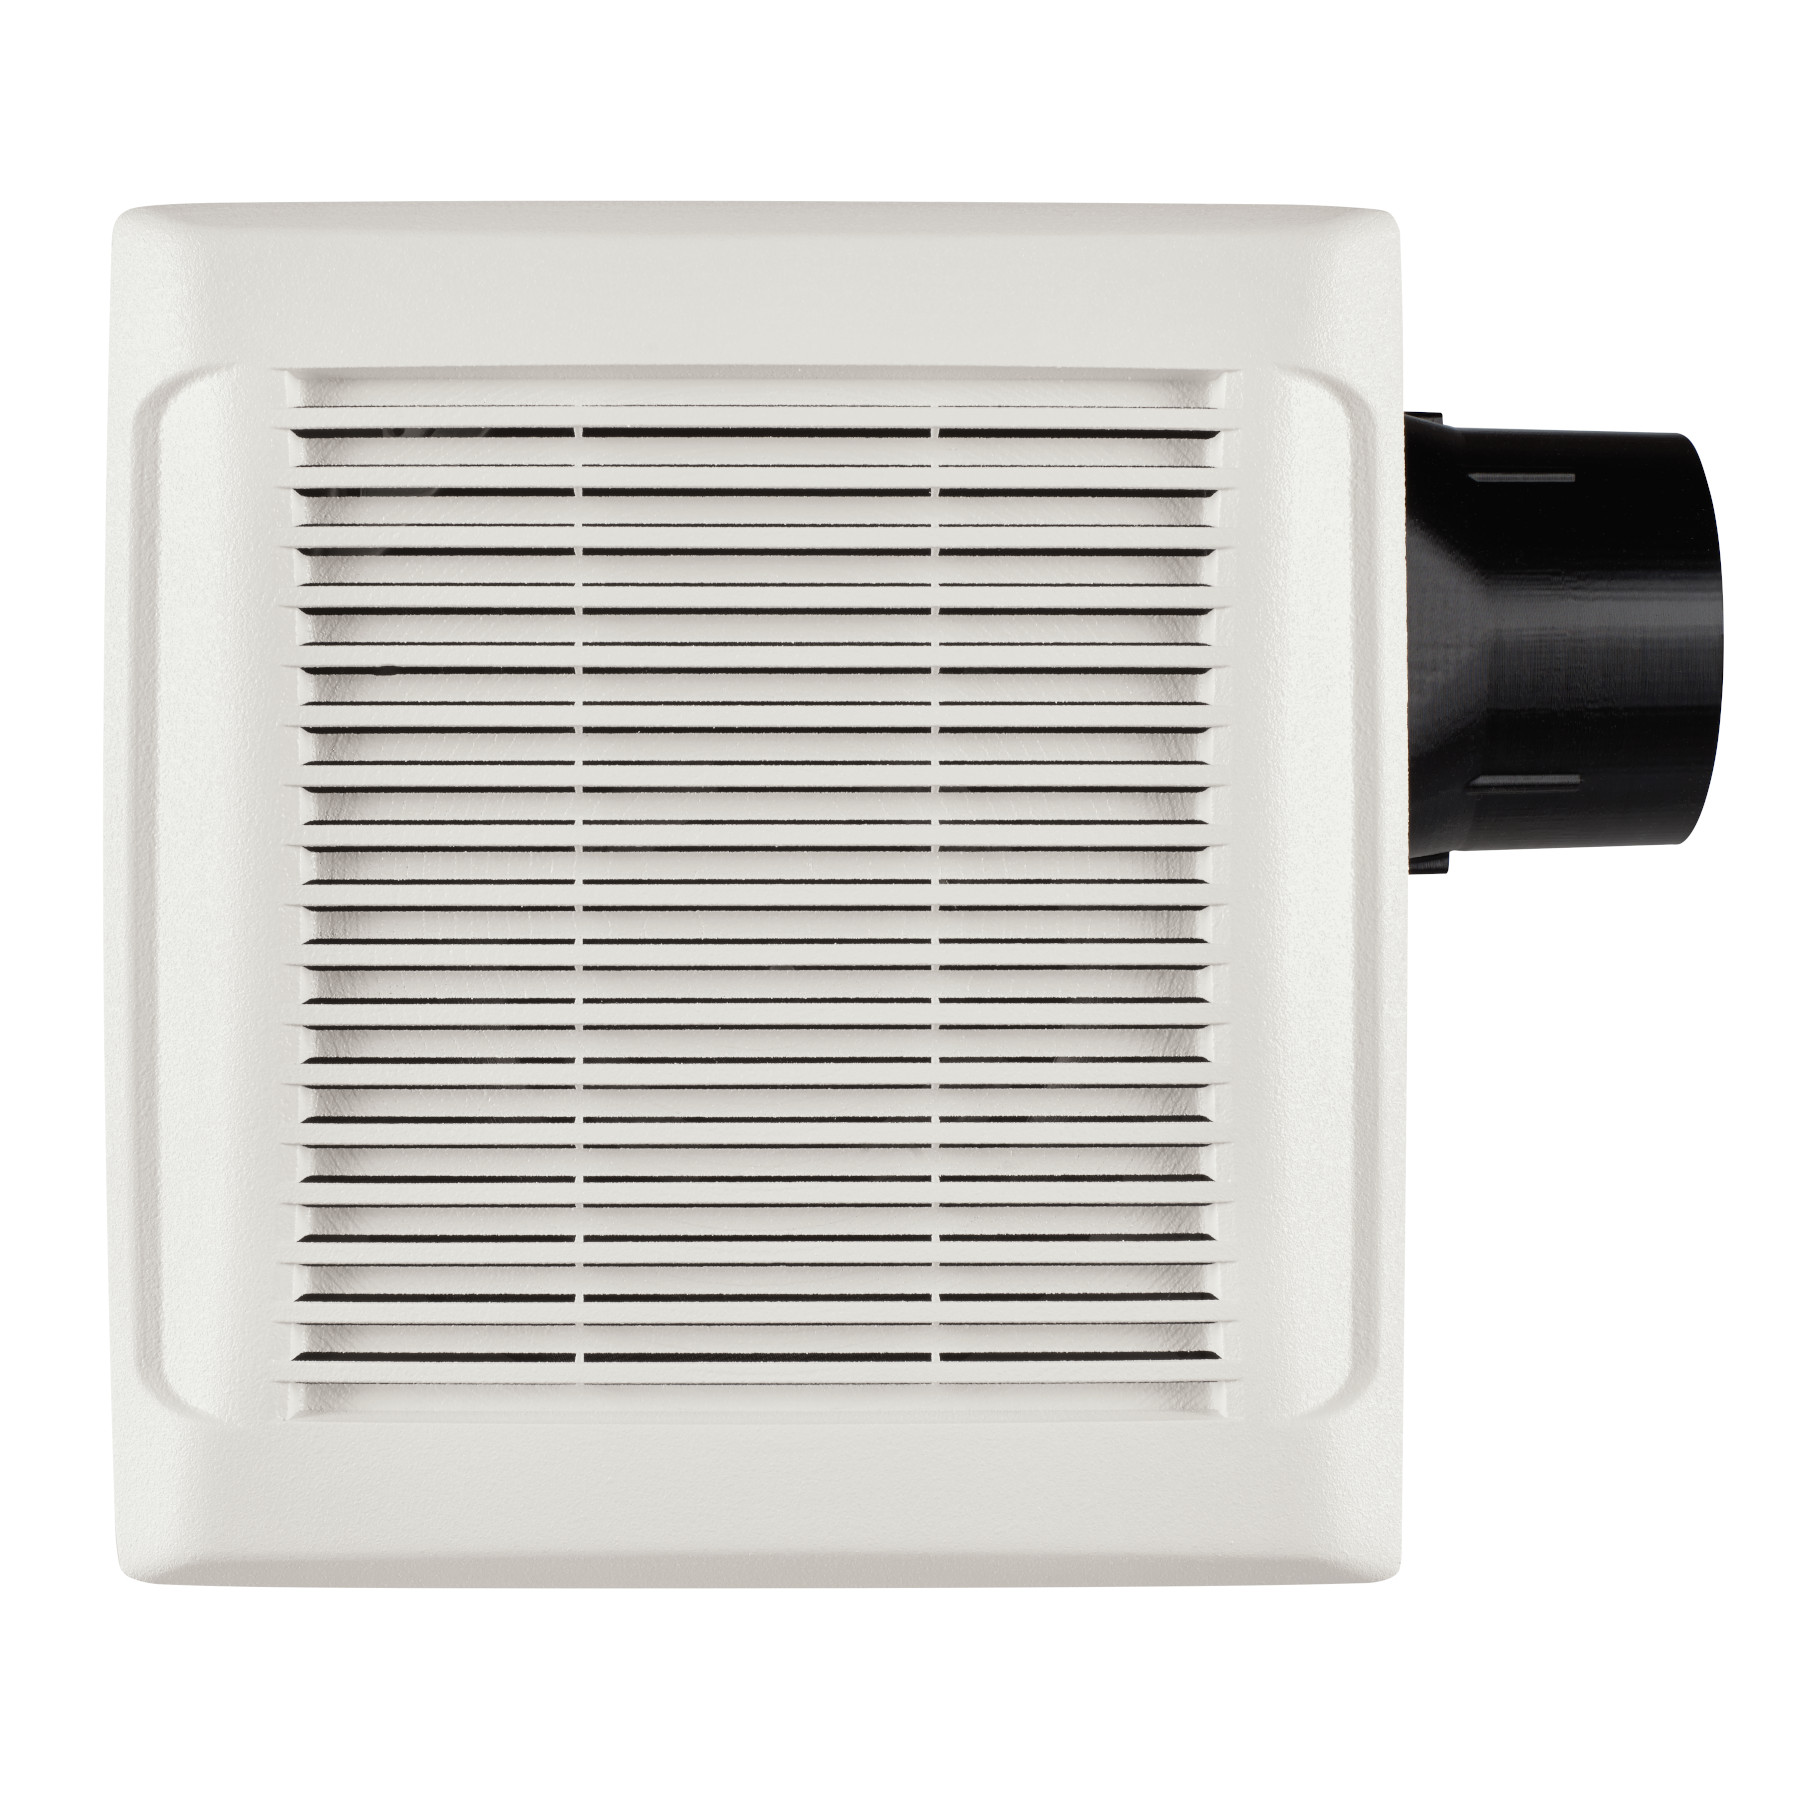 NuTone InVent Series 80 CFM Ceiling Bathroom Exhaust Fan ARN80 